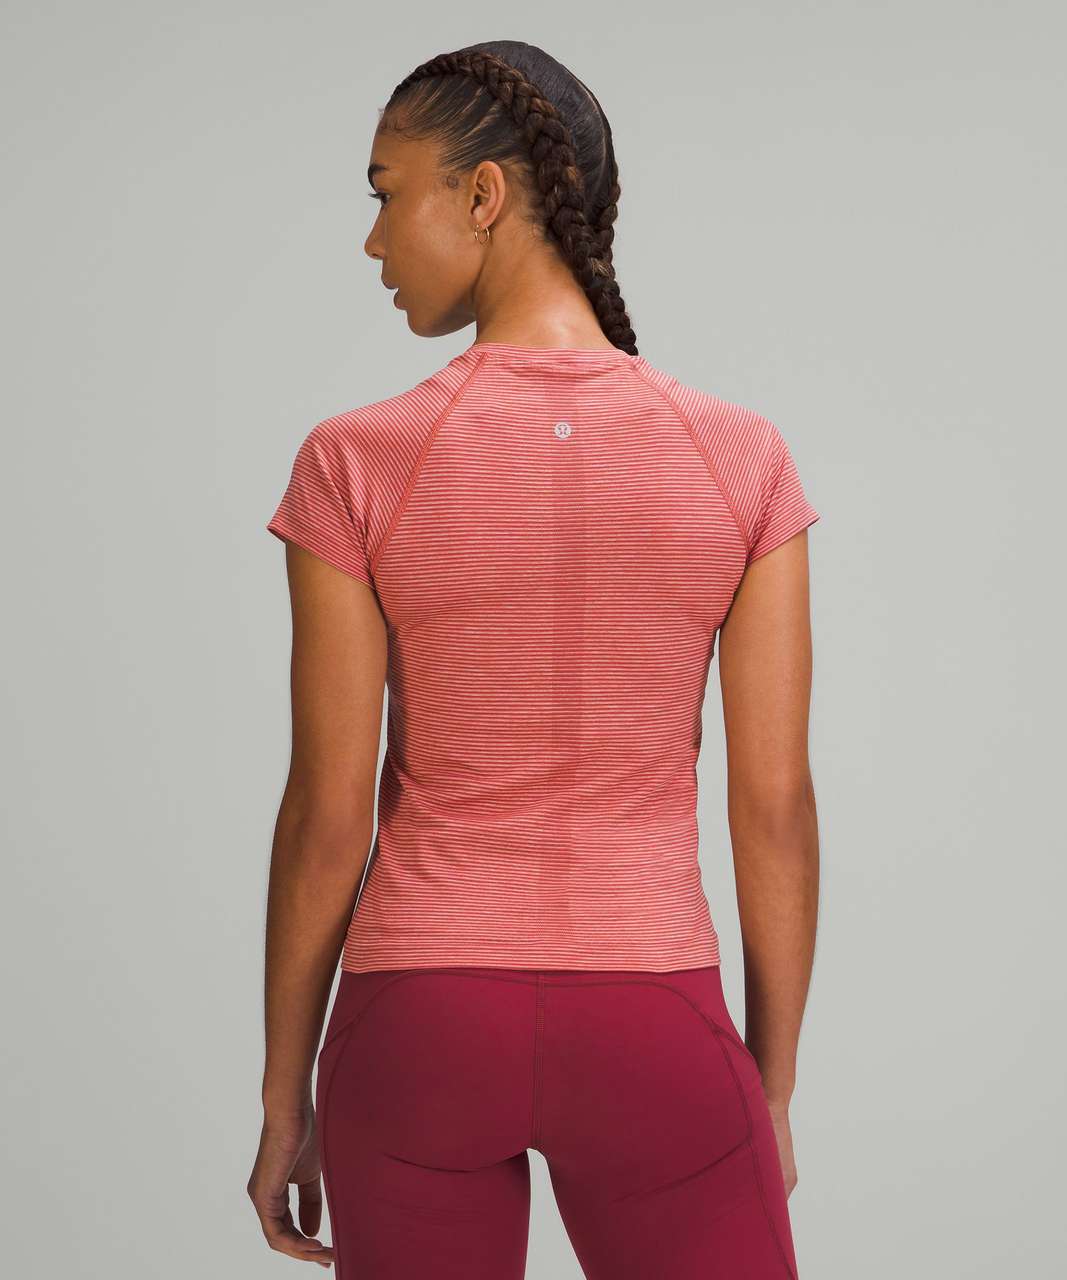 Lululemon Swiftly Tech Short Sleeve Shirt 2.0 *Race Length - Tetra Stripe Pink Savannah / Pink Mist / Mulled Wine / Red Rock